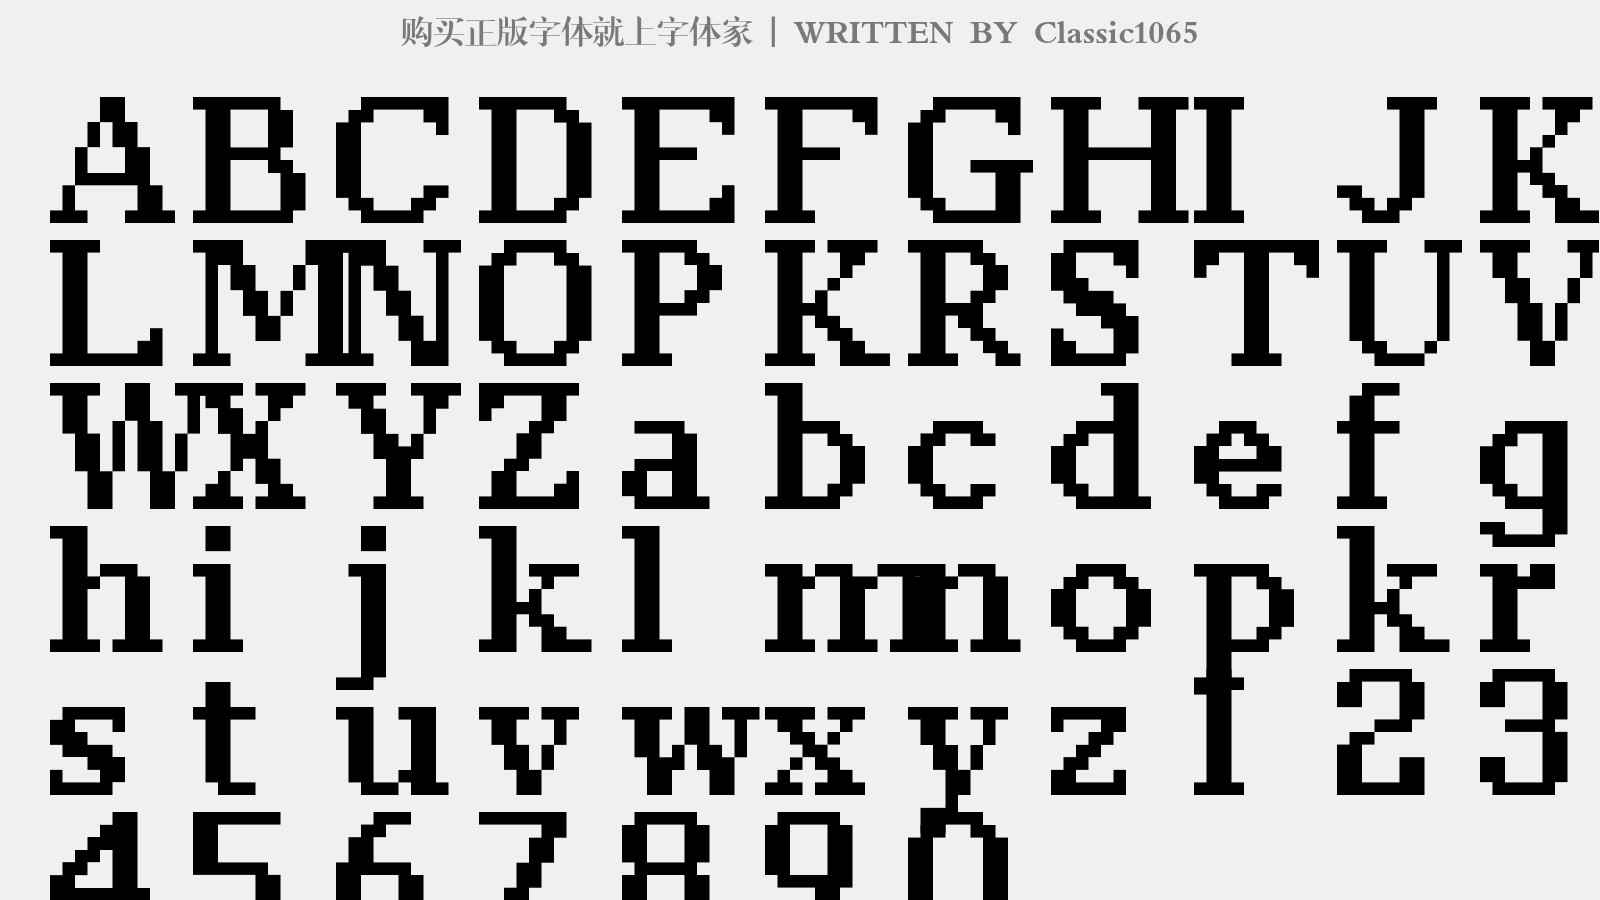 Classic1065 - 大写字母/小写字母/数字